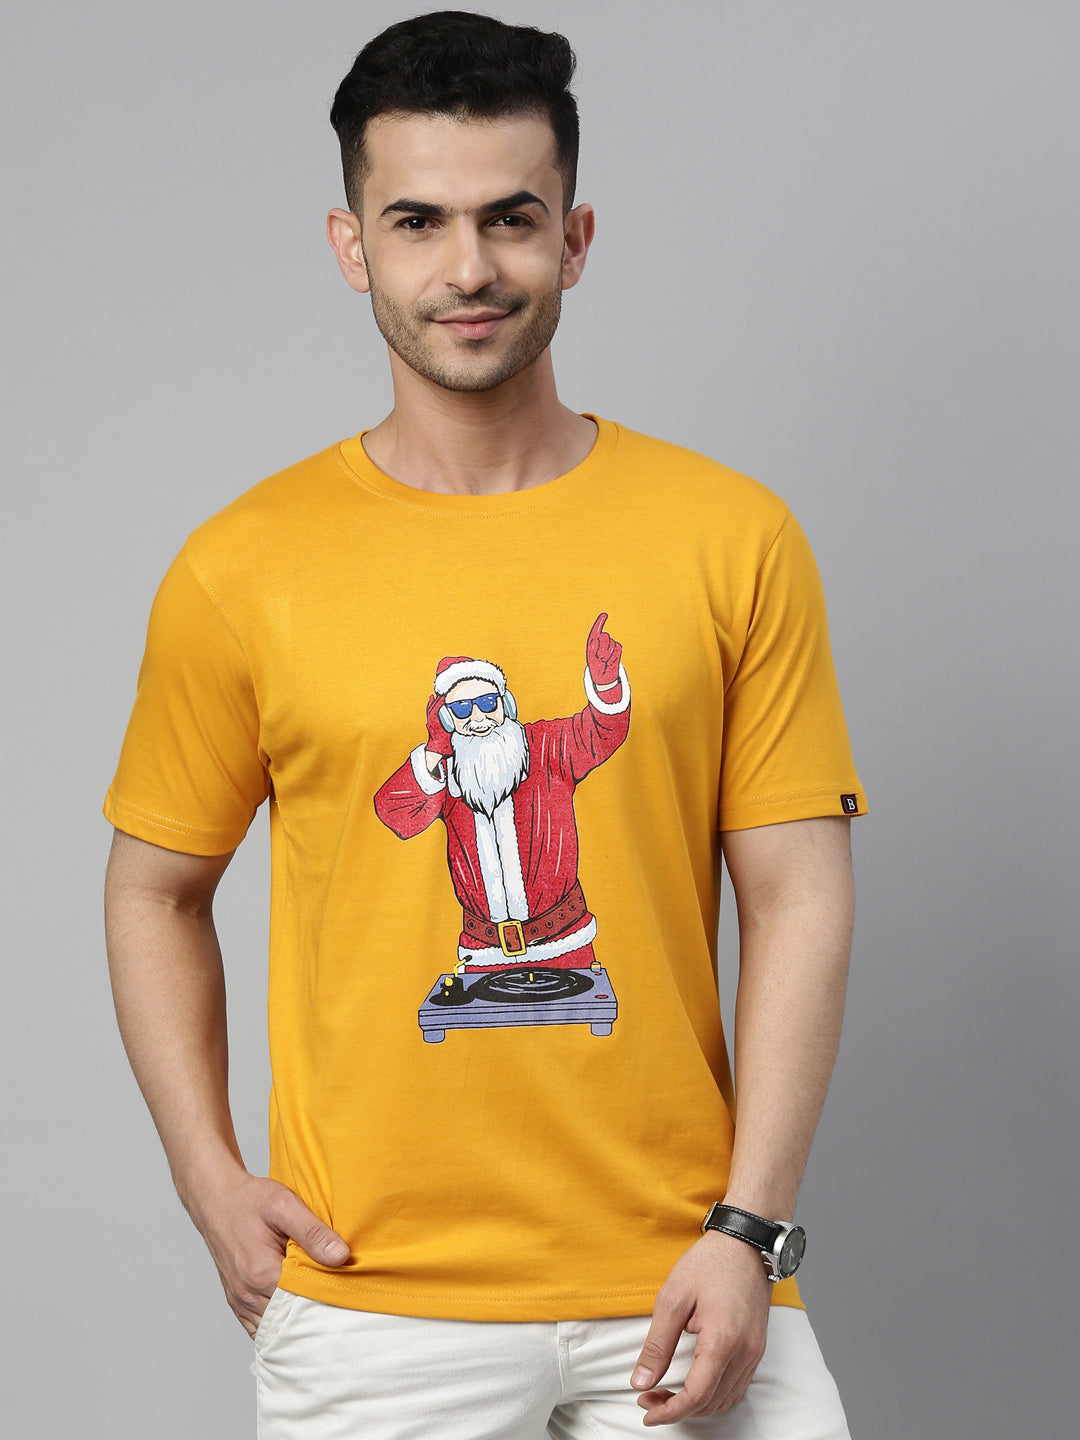 DJ Santa In the House T-Shirt Graphic T-Shirts Bushirt   